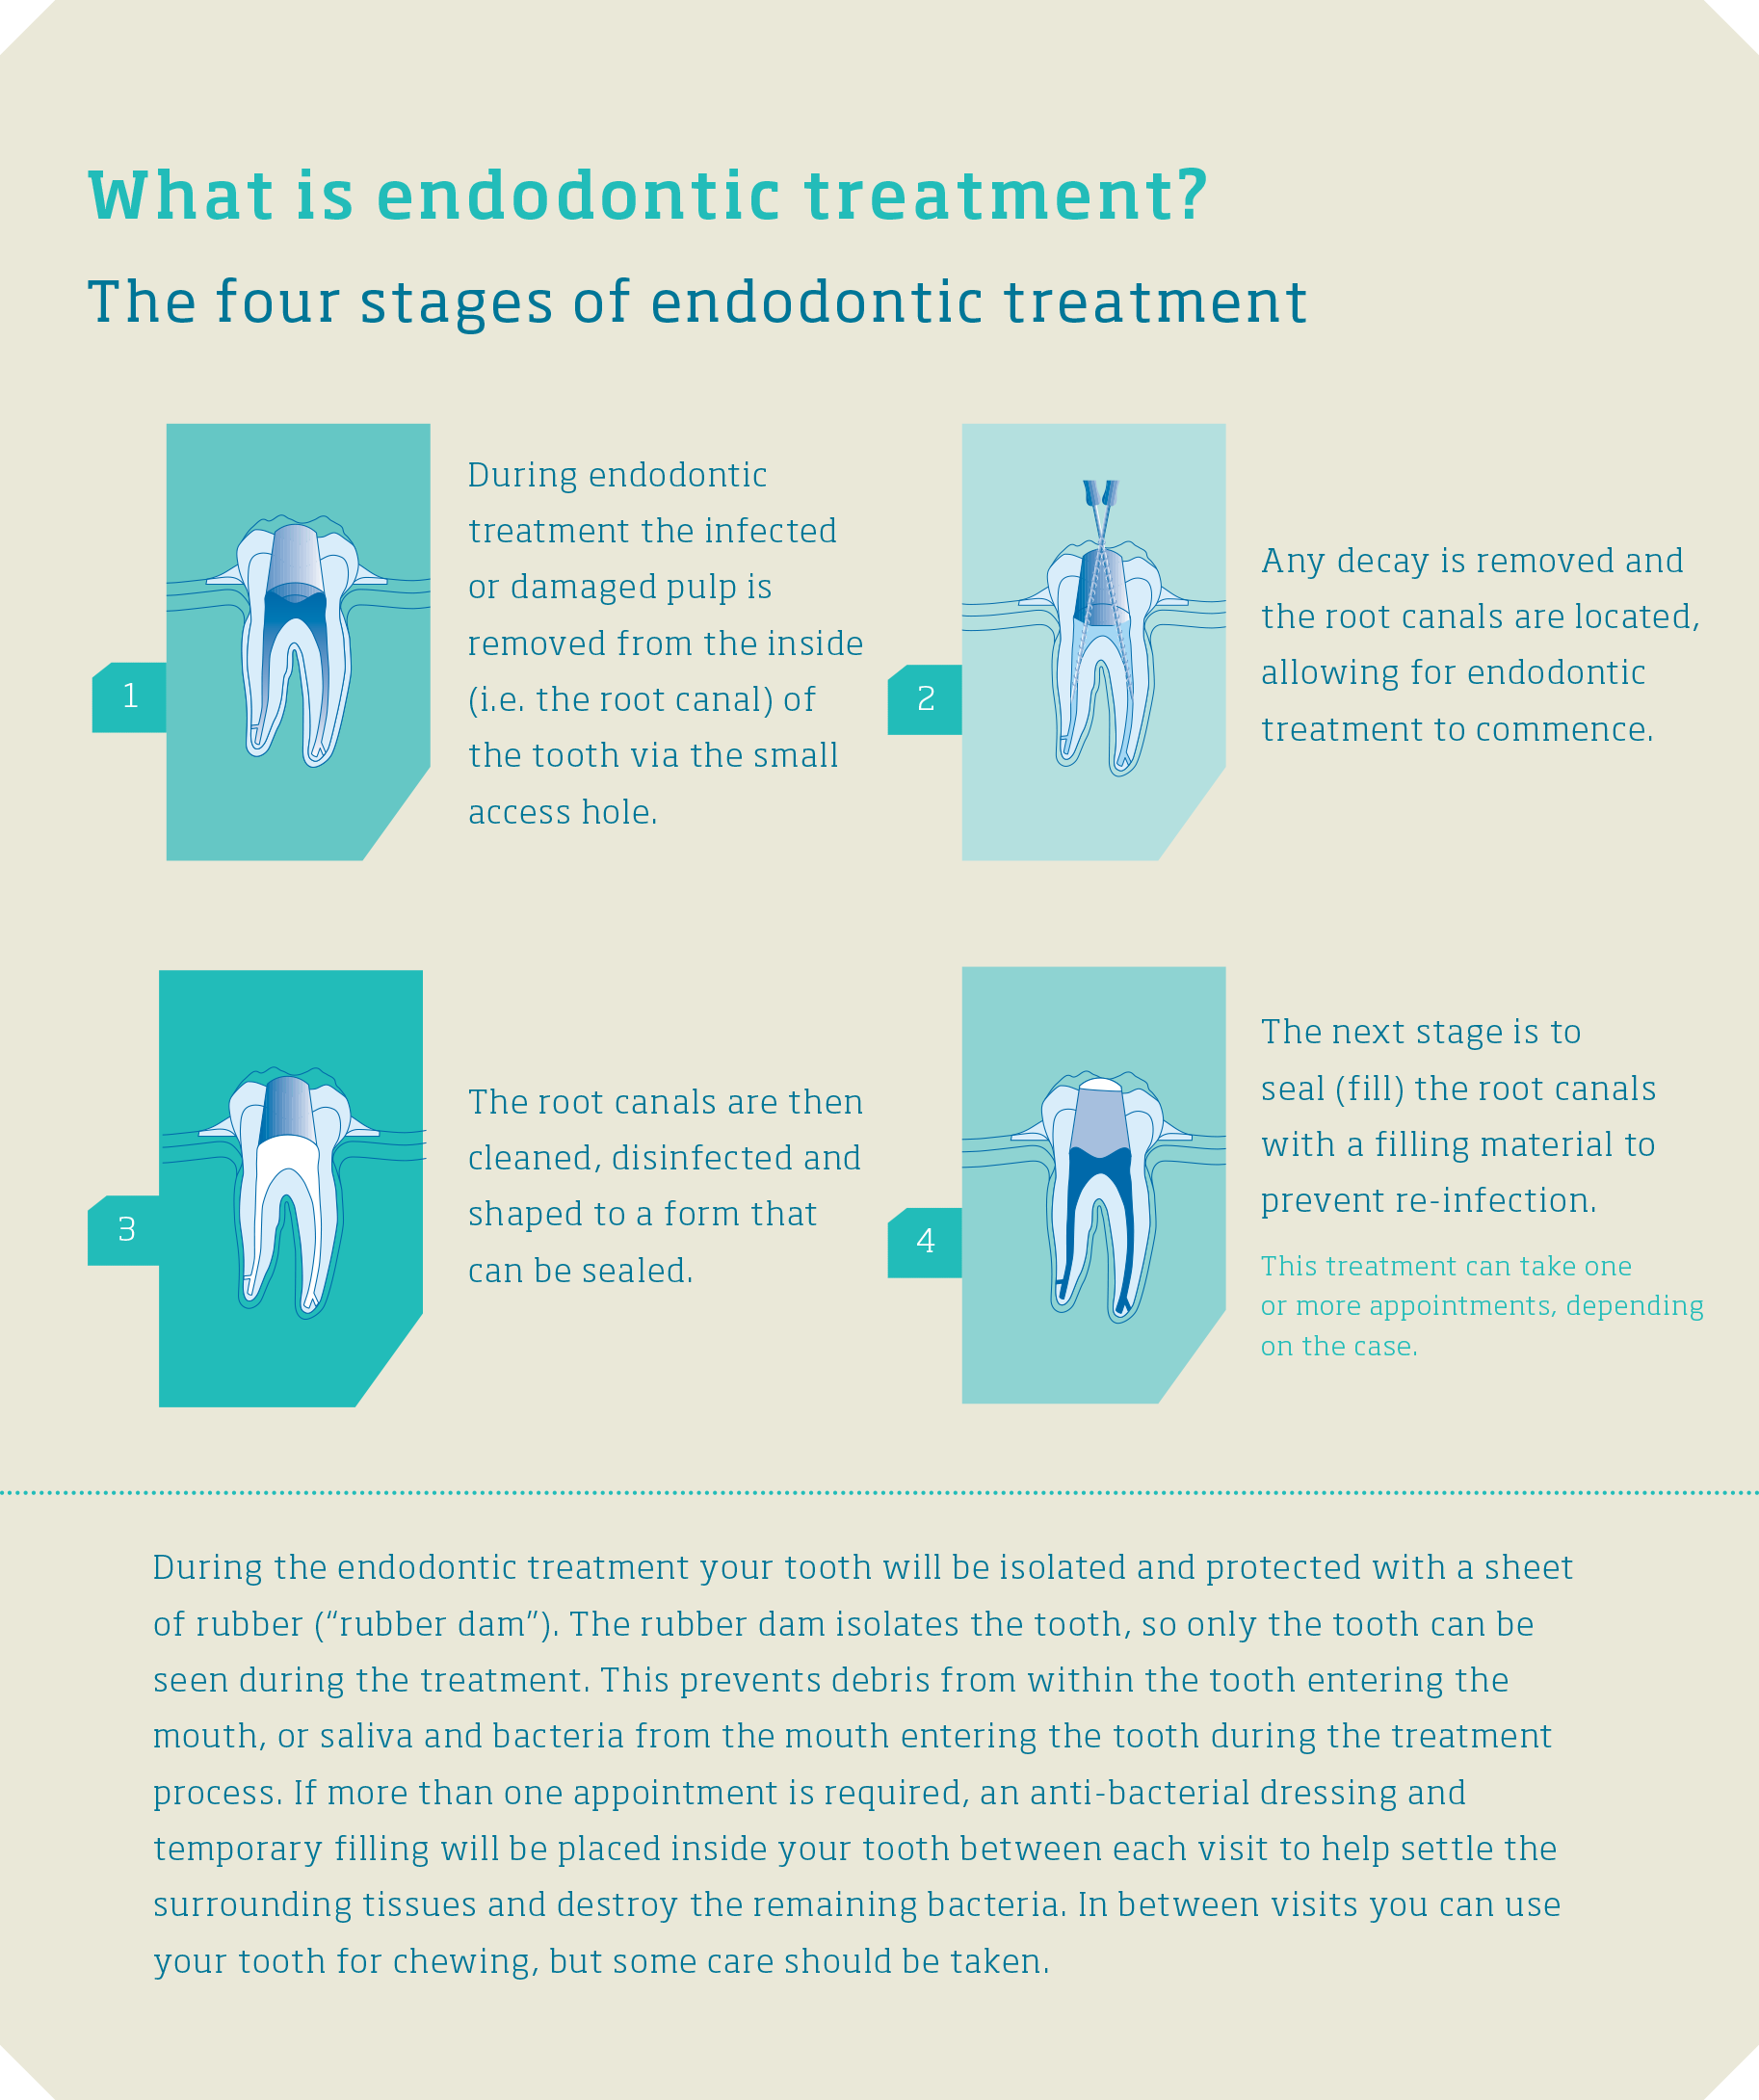 What is endodontic treatment?